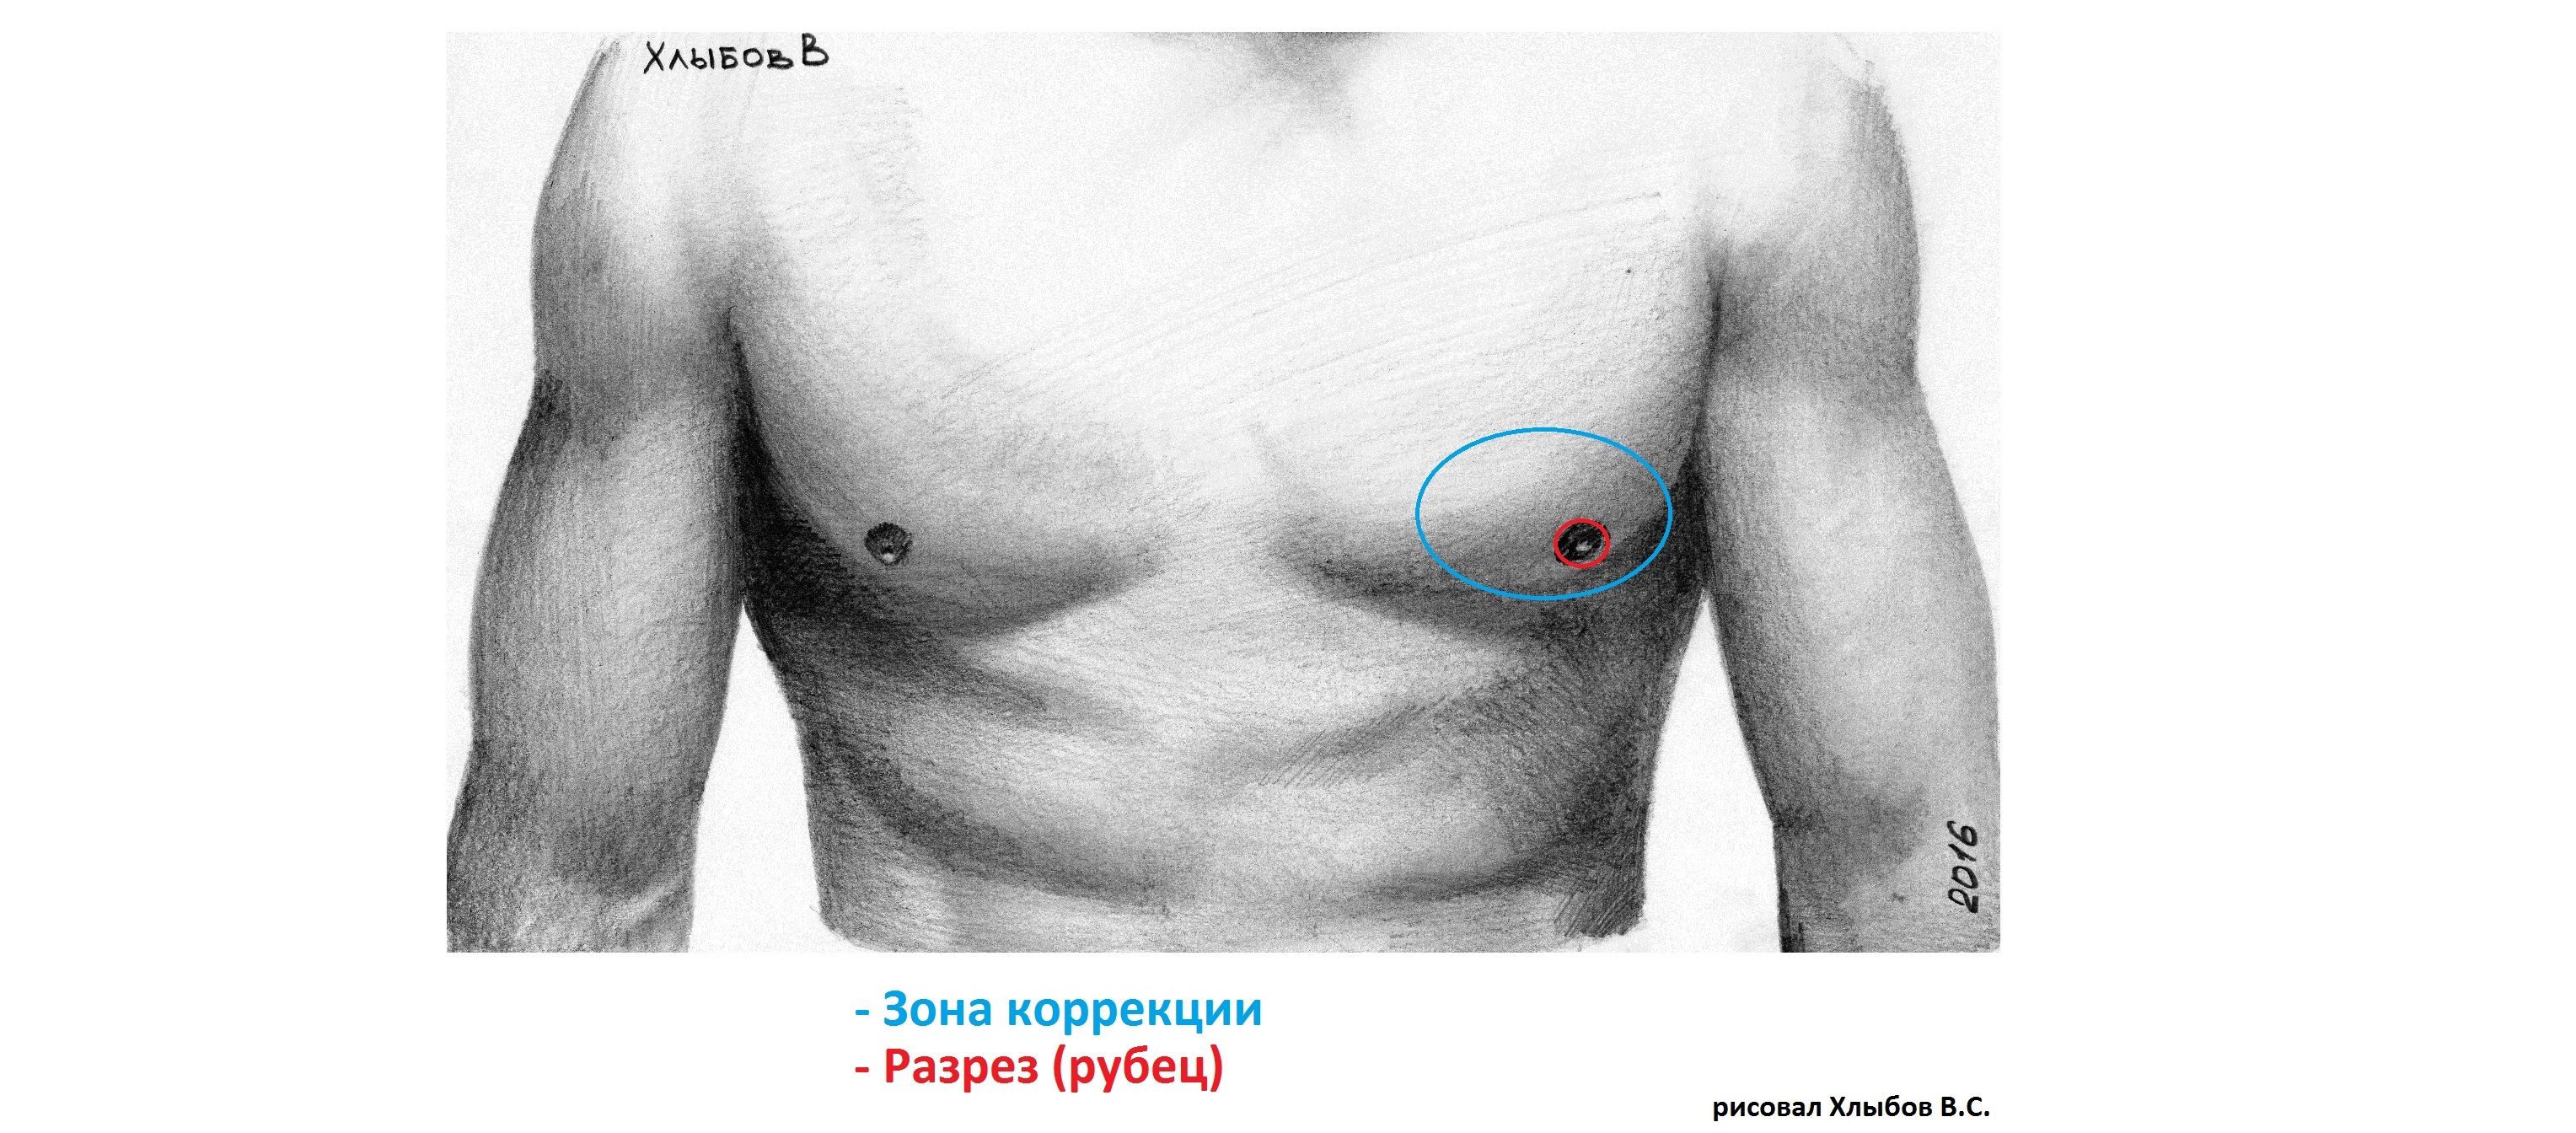 опухоль у мужчин в области груди фото 115